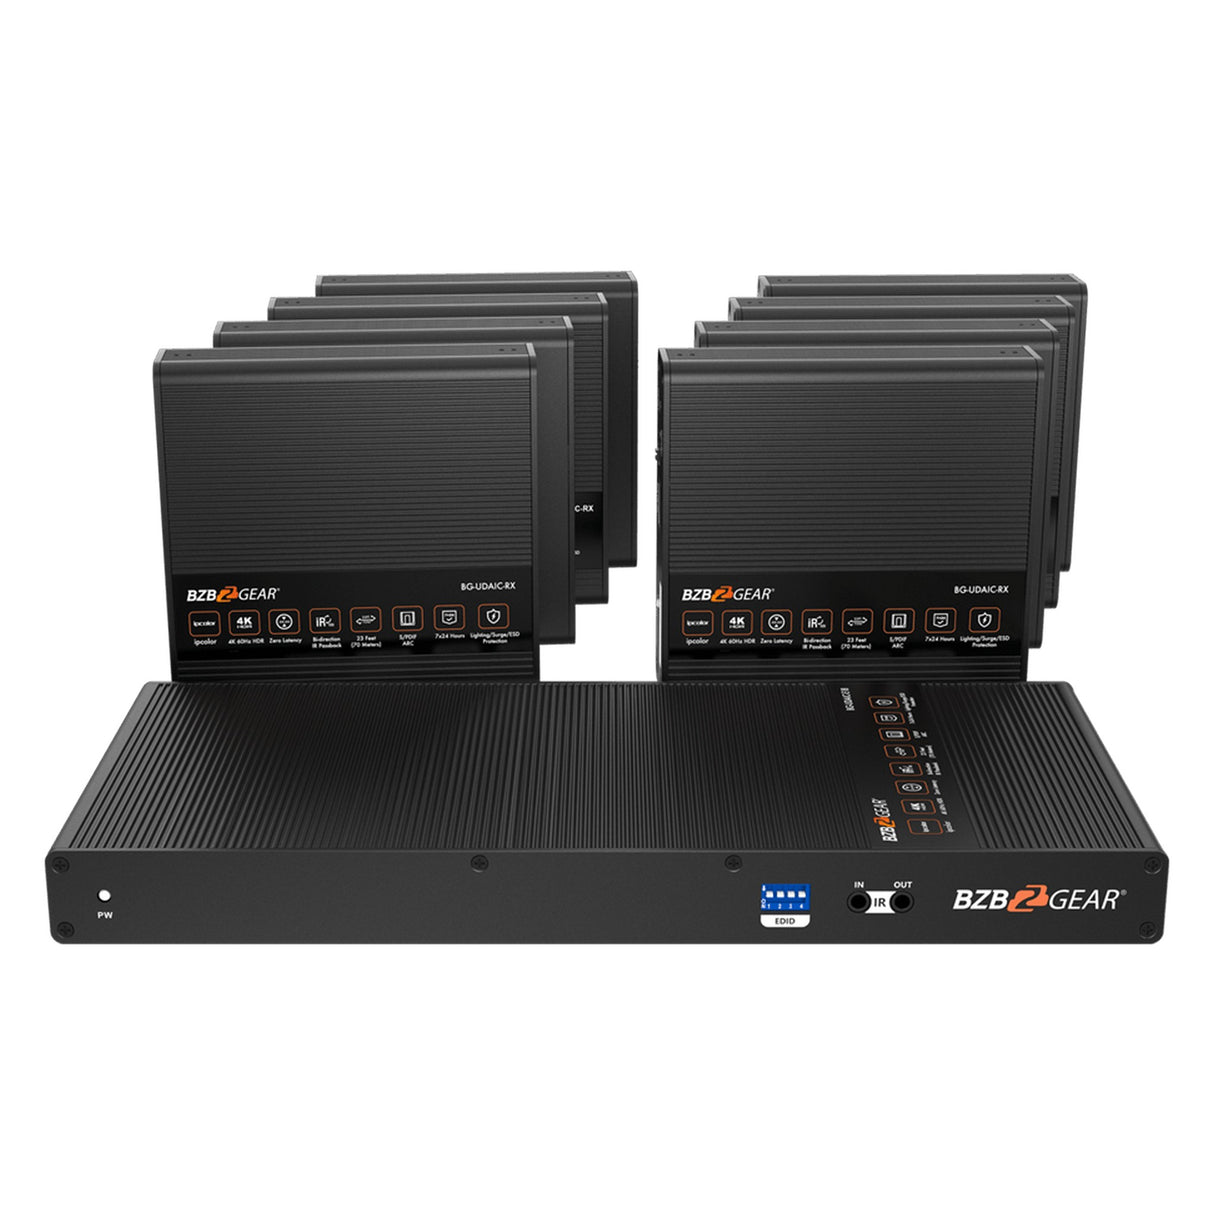 BZBGEAR BG-UDAIC-E18 1X8 4K60 UHD 18Gbps HDMI Splitter/Distribution Amplifier